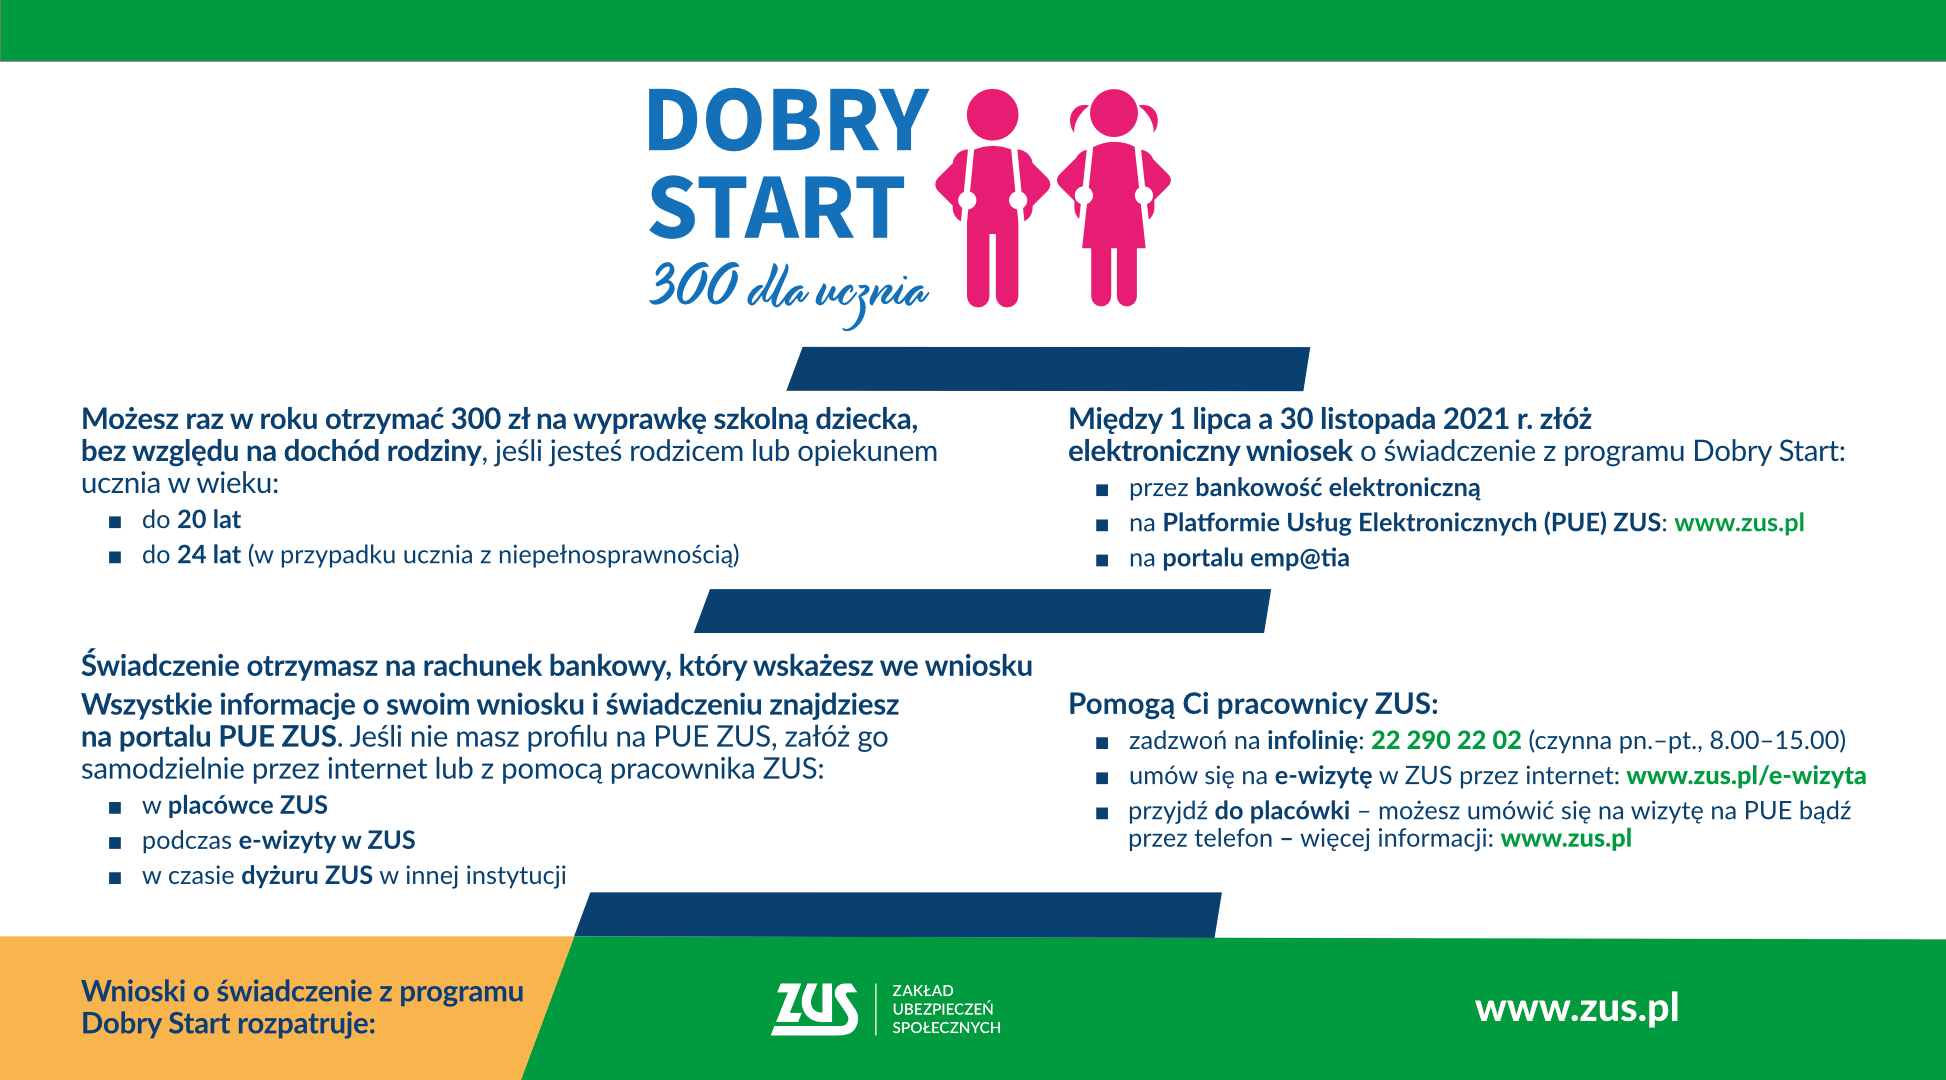 infografika Dobry Start 300 info oglne 2 1